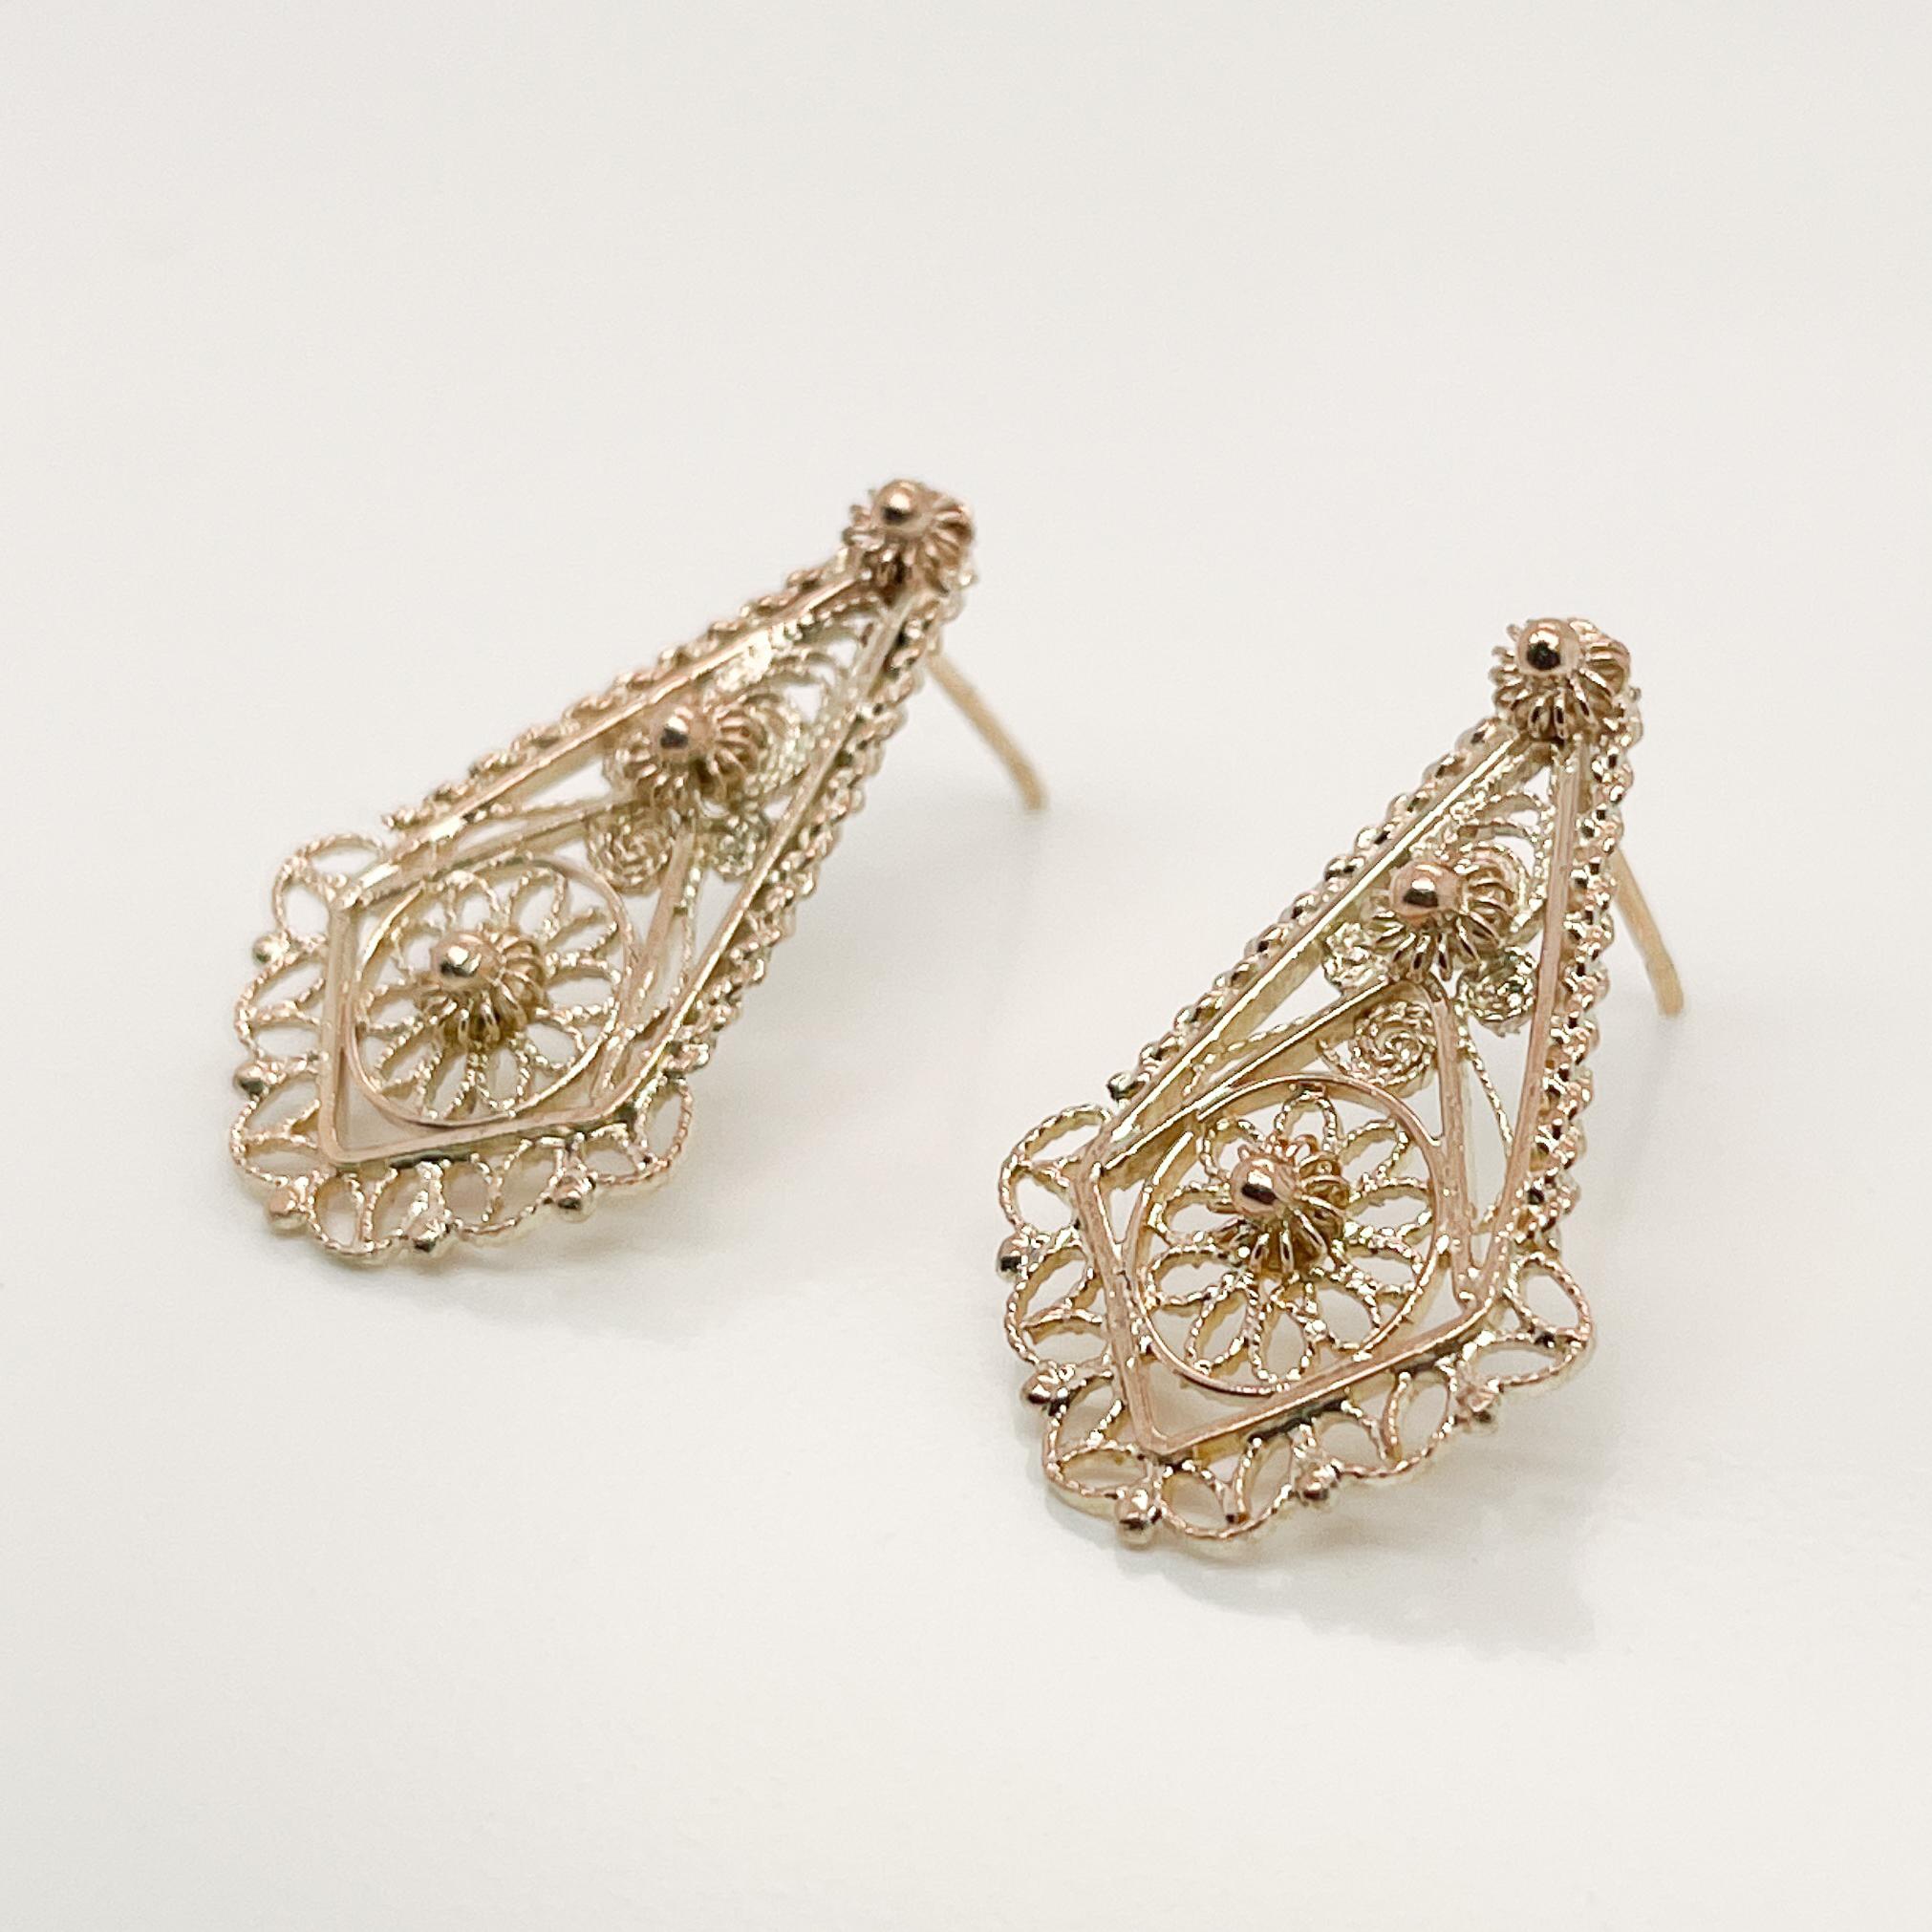 Vintage 14 Karat Gold Etruscan Revival Style Filigree Earrings In Good Condition For Sale In Philadelphia, PA